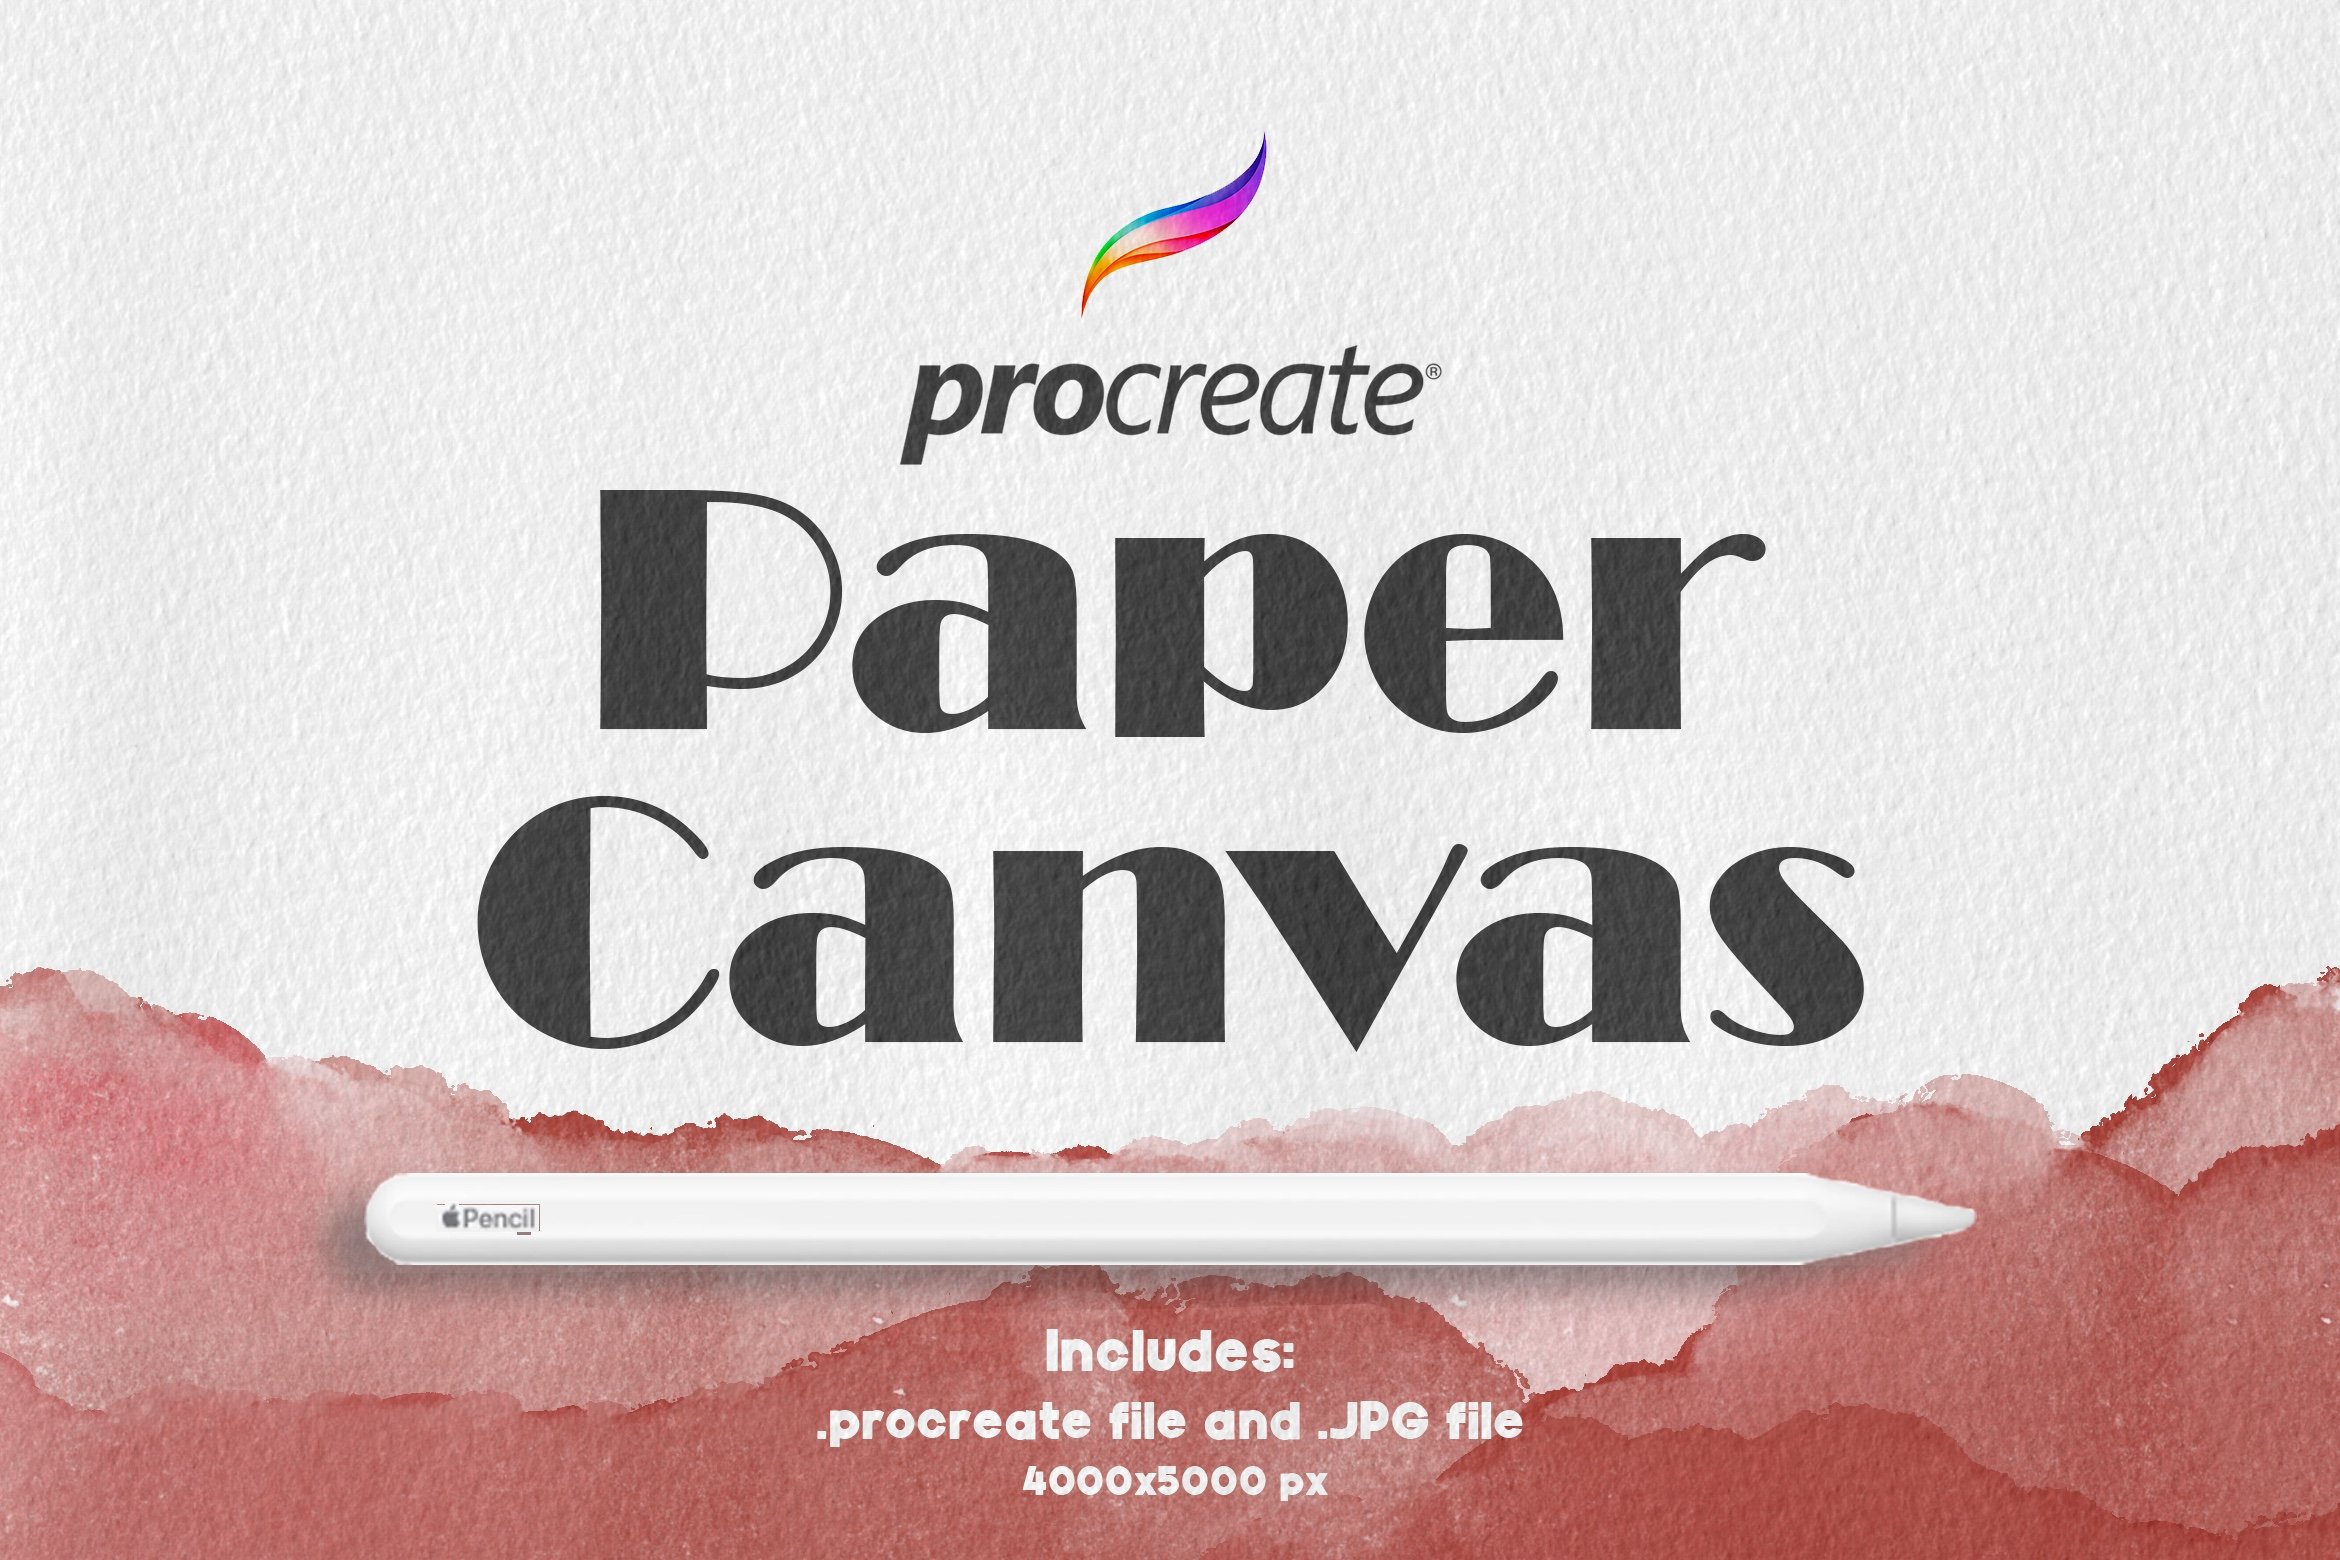 procreate canvas free